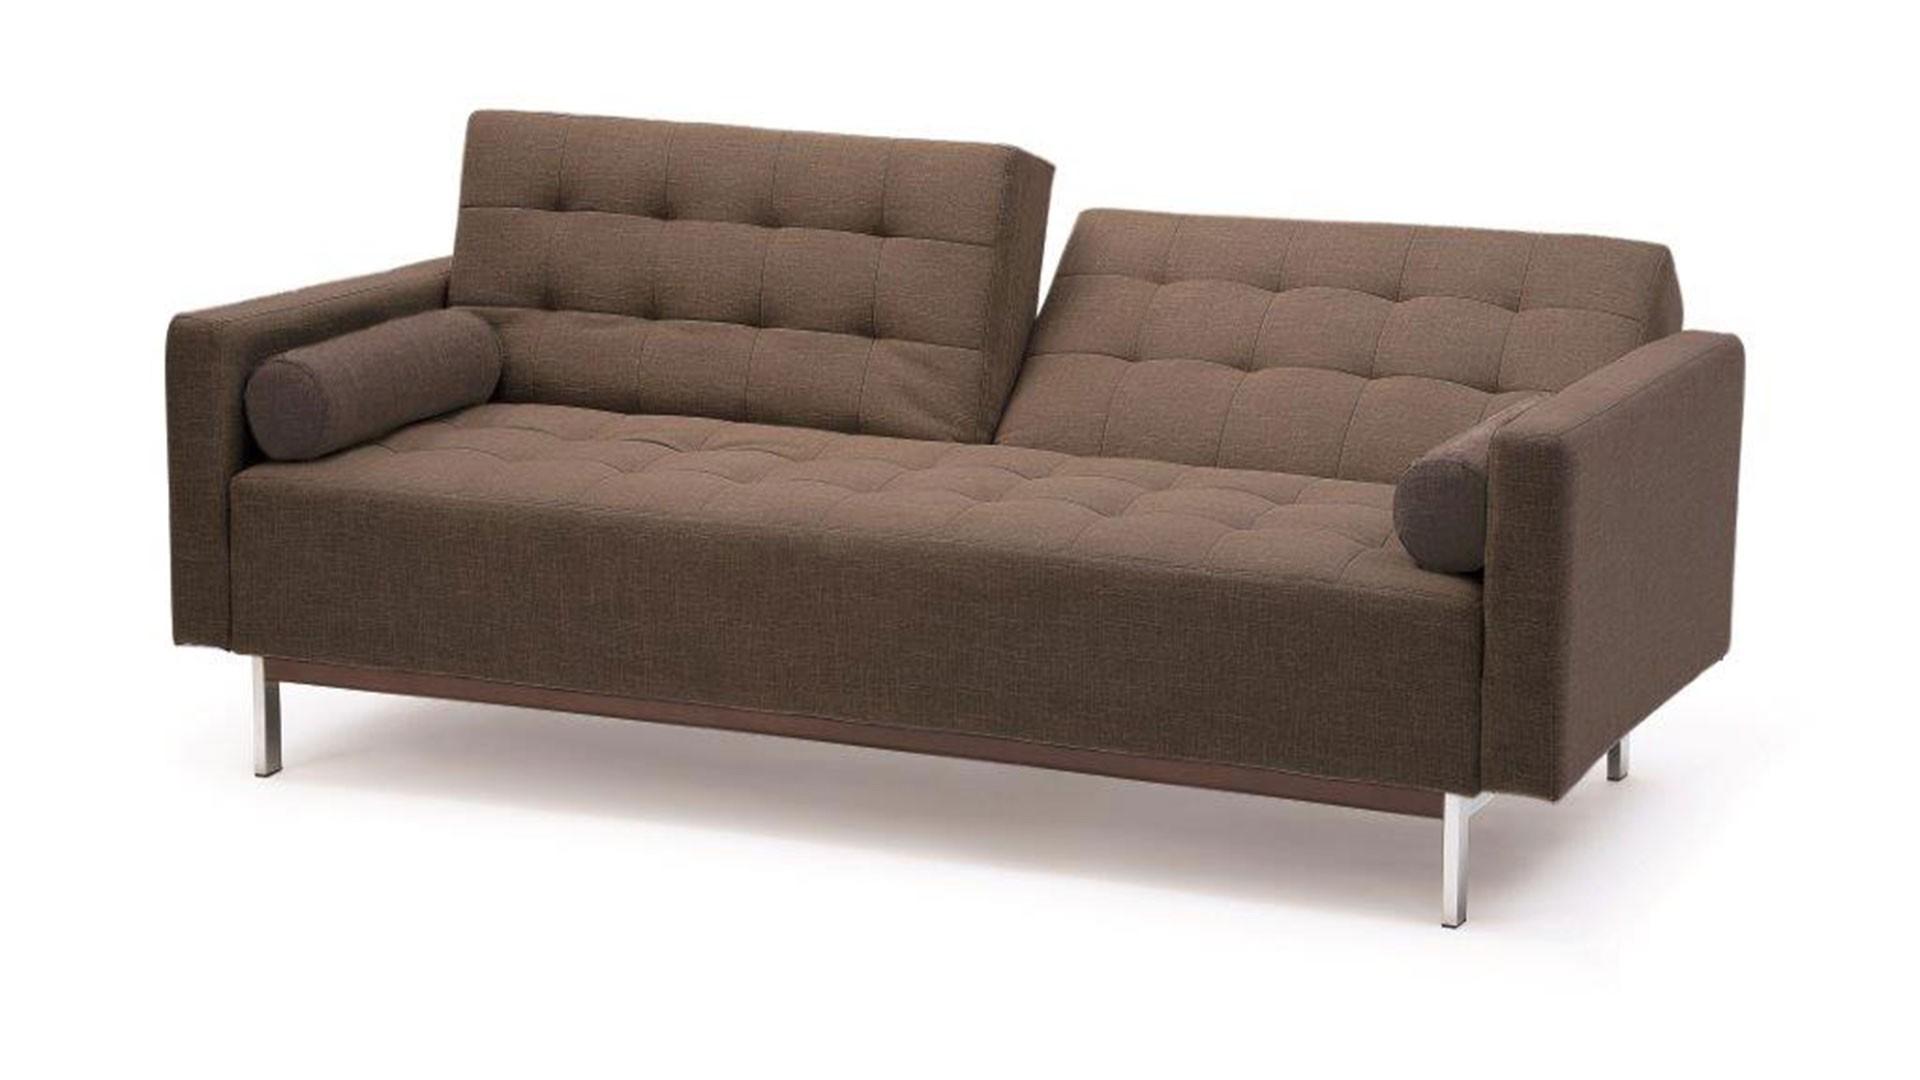 

    
At Home USA Bonaventura Sofa Sleeper in Brown Chrome Legs Contemporary Style
